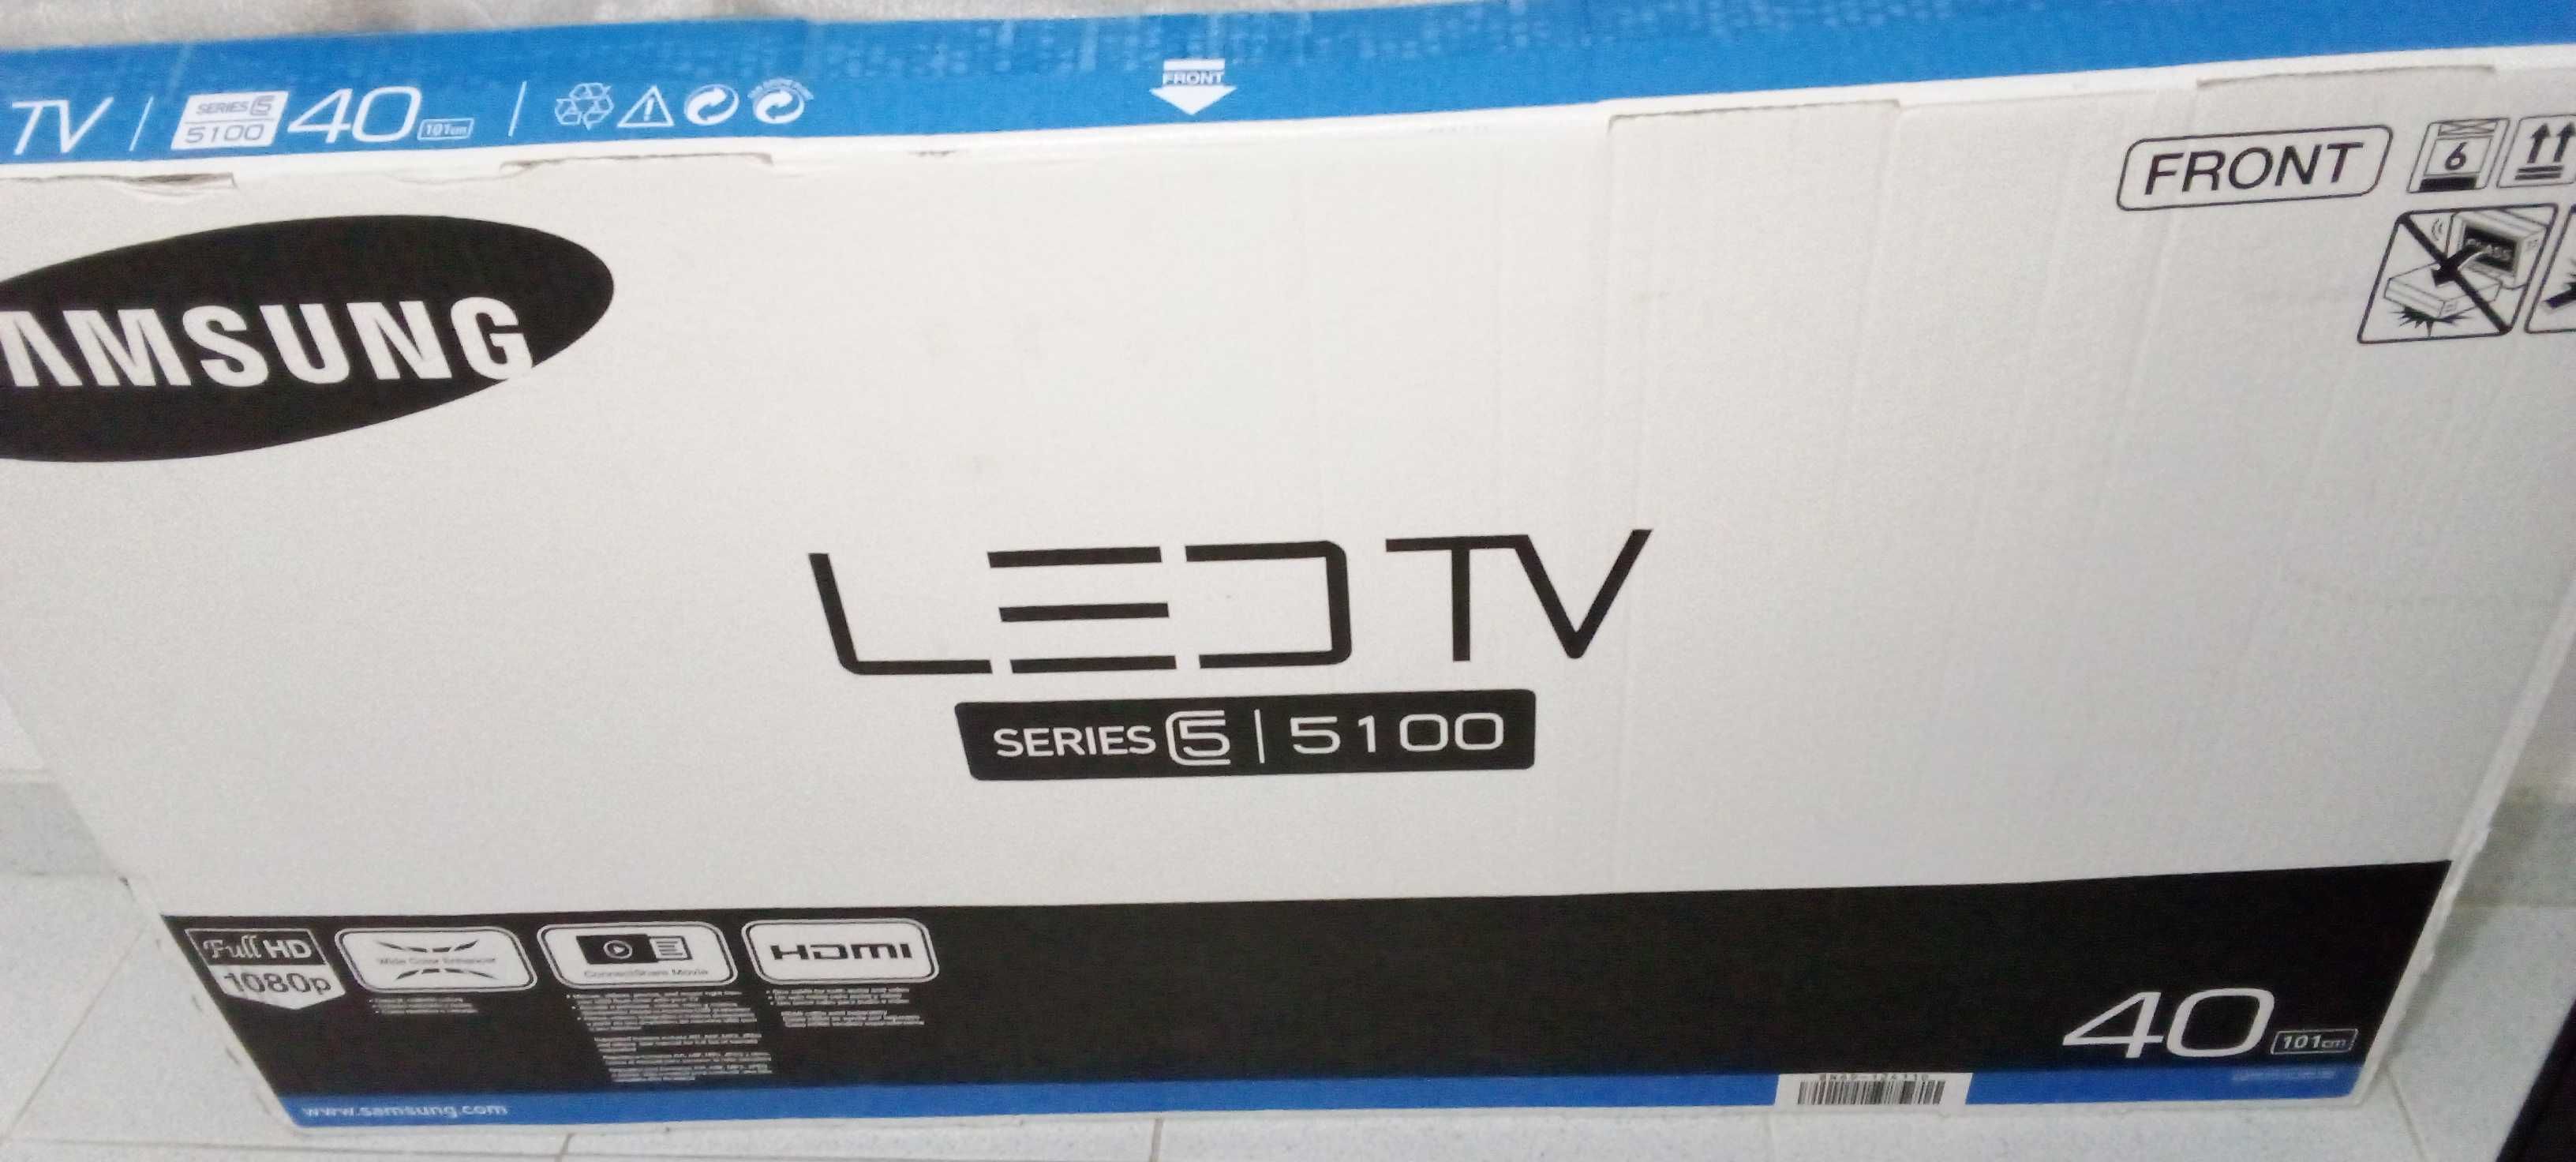 Tv Samsung led tv